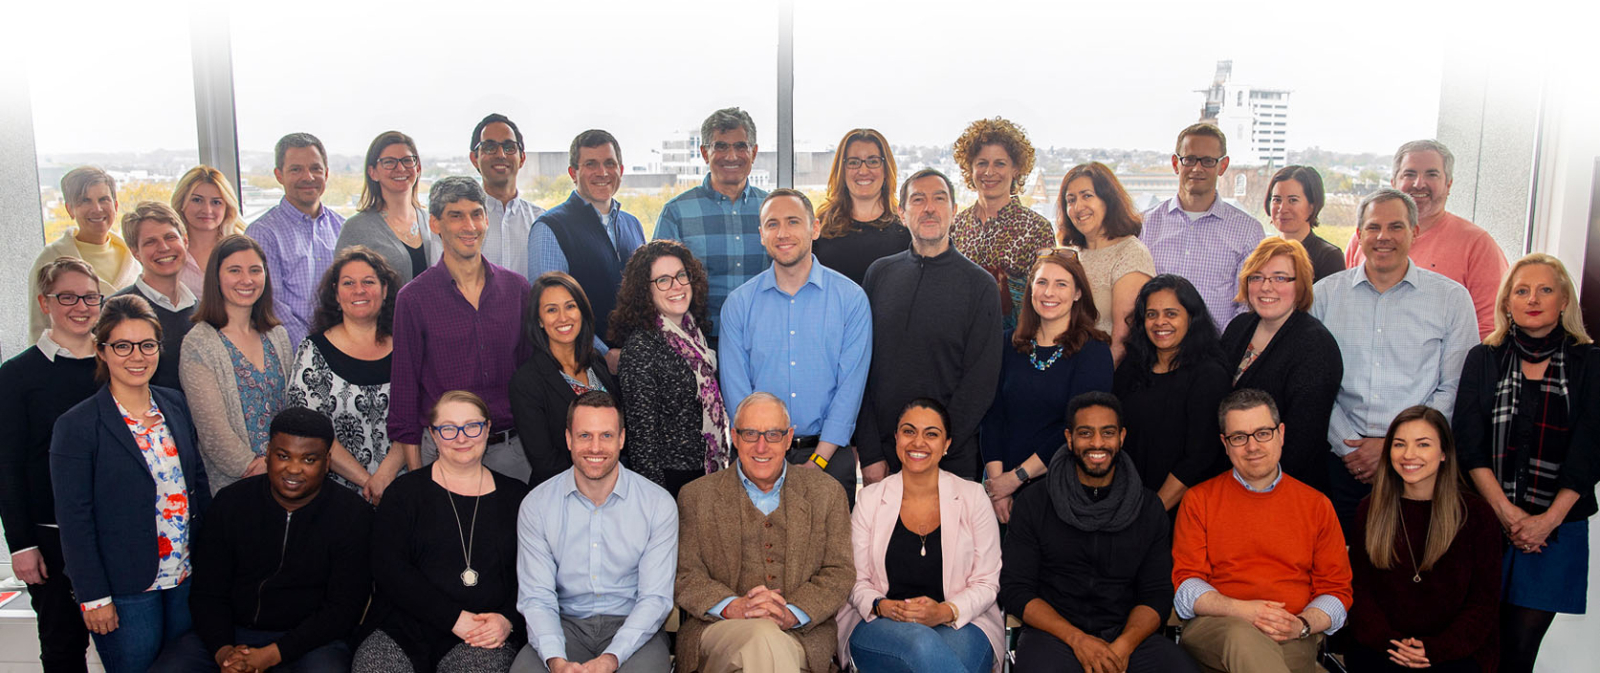 Group photo of the staff of Harvard OTD.